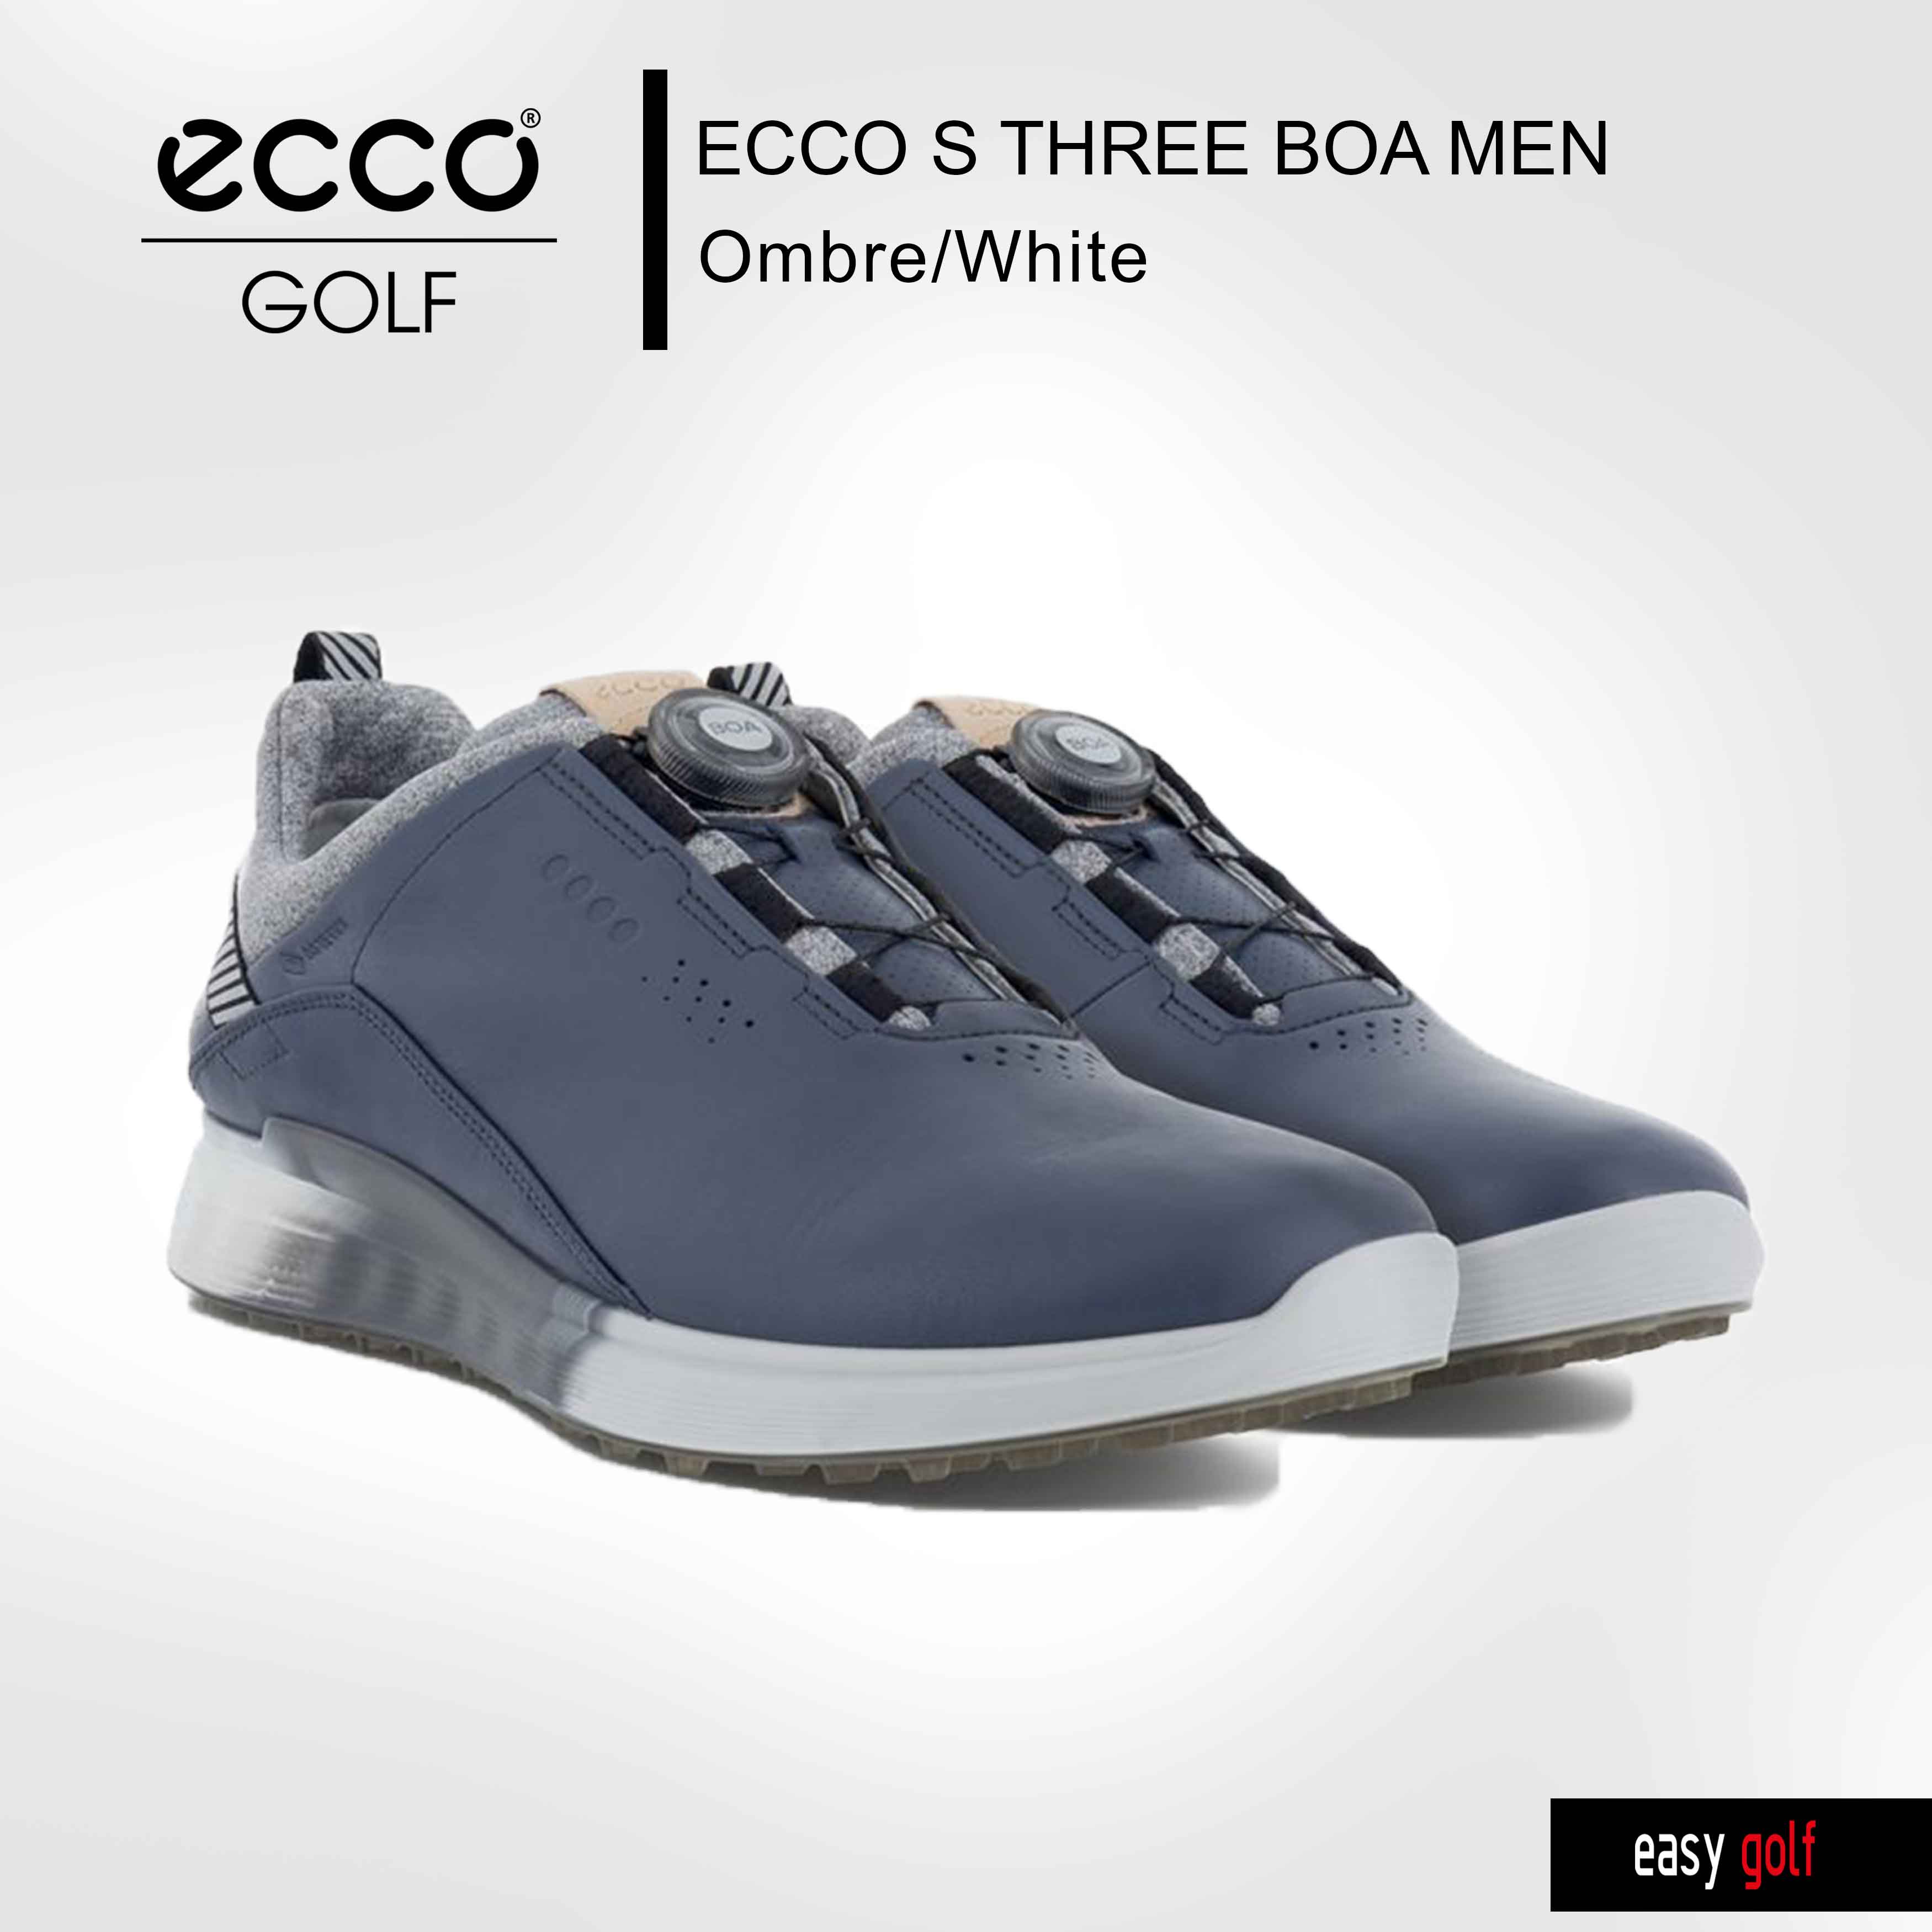 ECCO GOLF รองเท้ากอล์ฟผู้ชาย รองเท้ากีฬาชาย Golf Shoes รุ่น ECCO  S THREE BOA MEN สีเทา (Ombre/White)